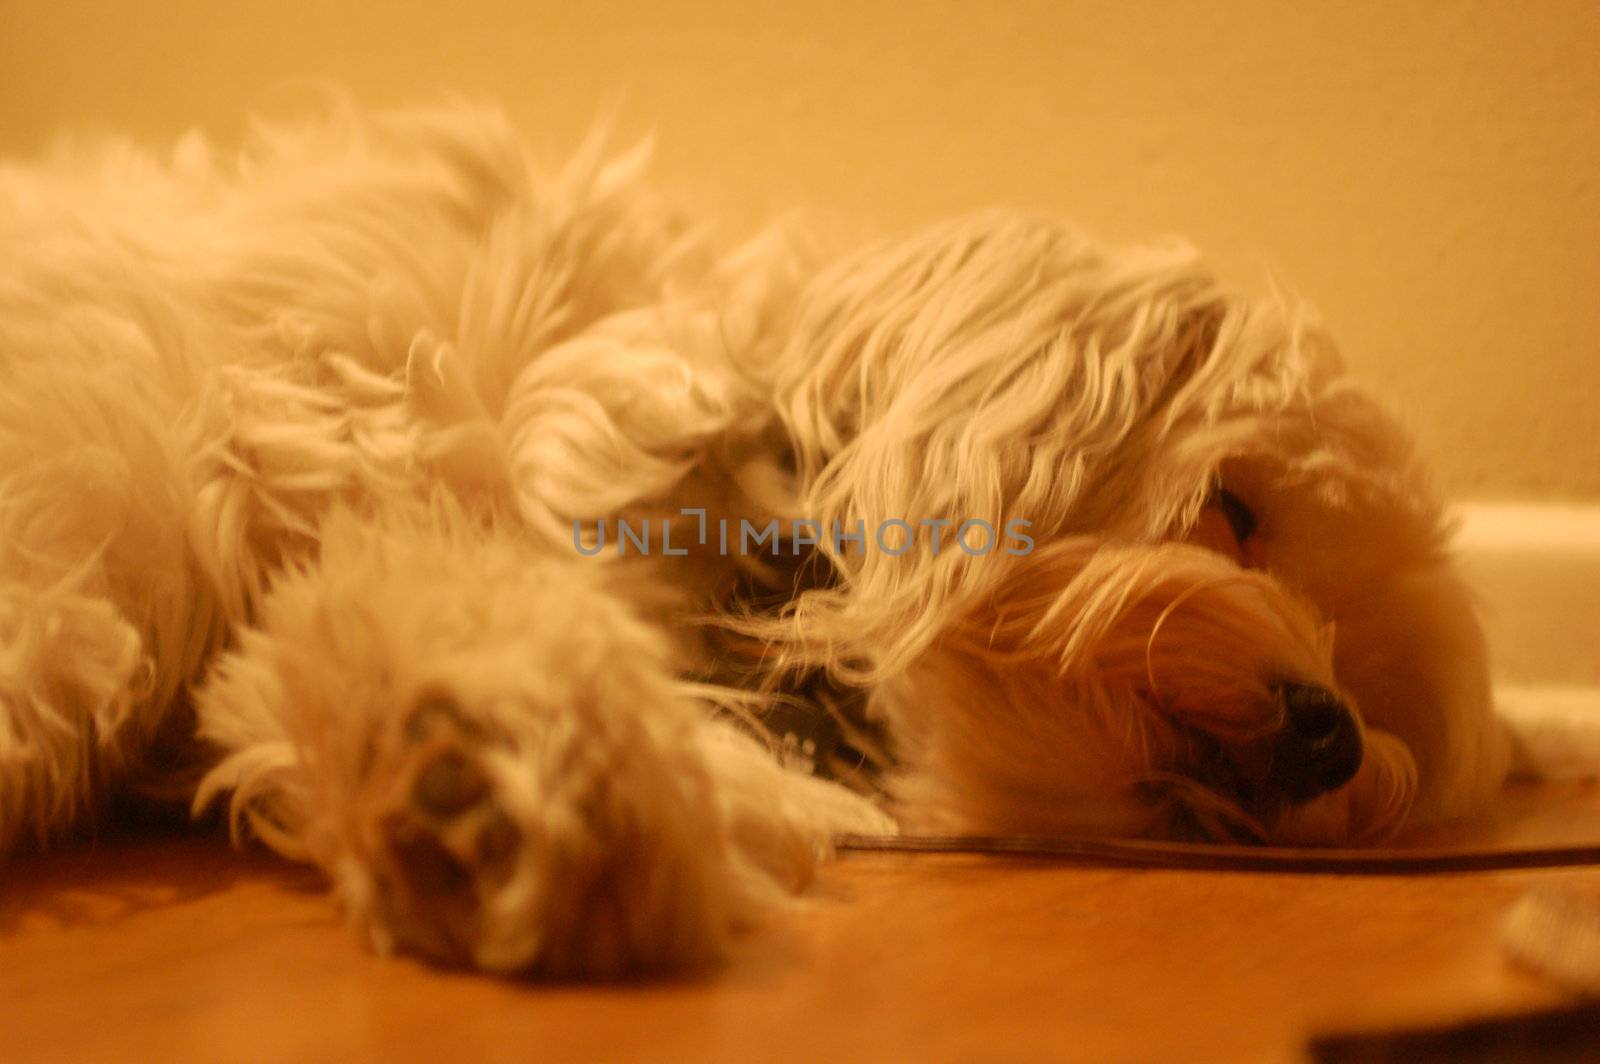 Sleeping Dog by PrincessToula